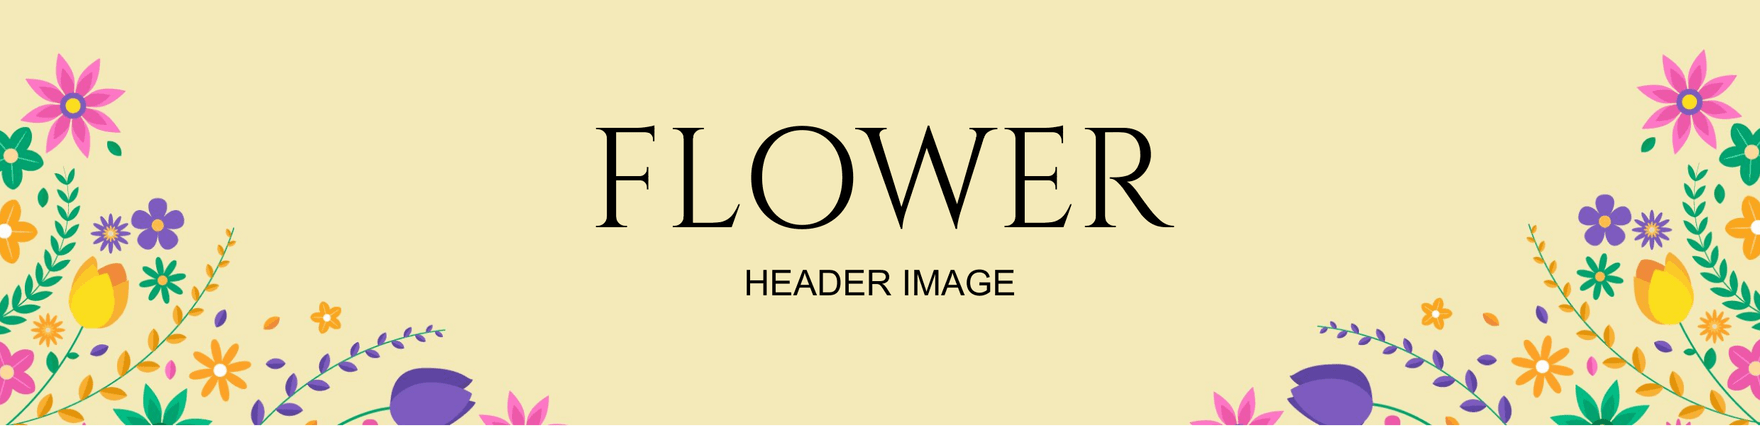 Free Flower Header Image Template